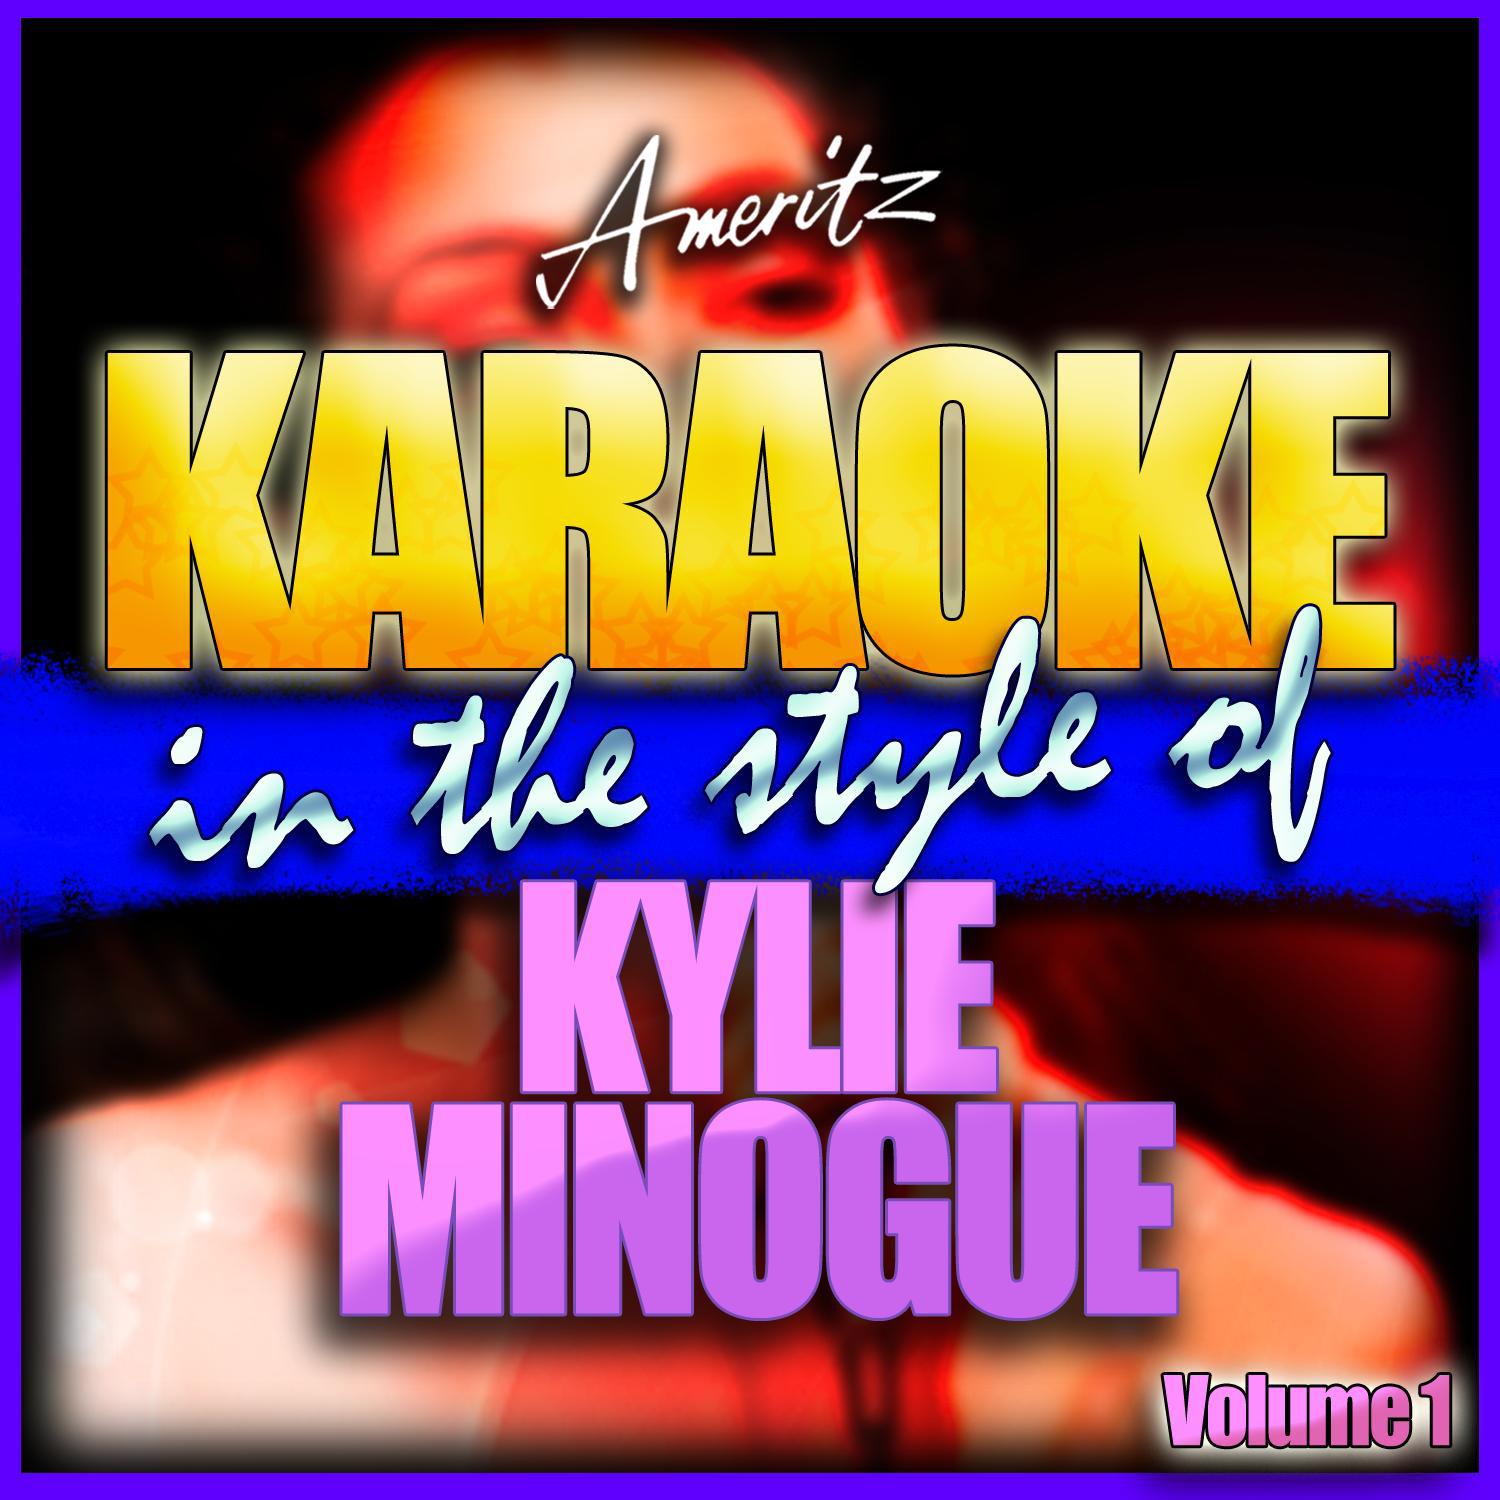 Karaoke - Kylie Minogue Vol. 1